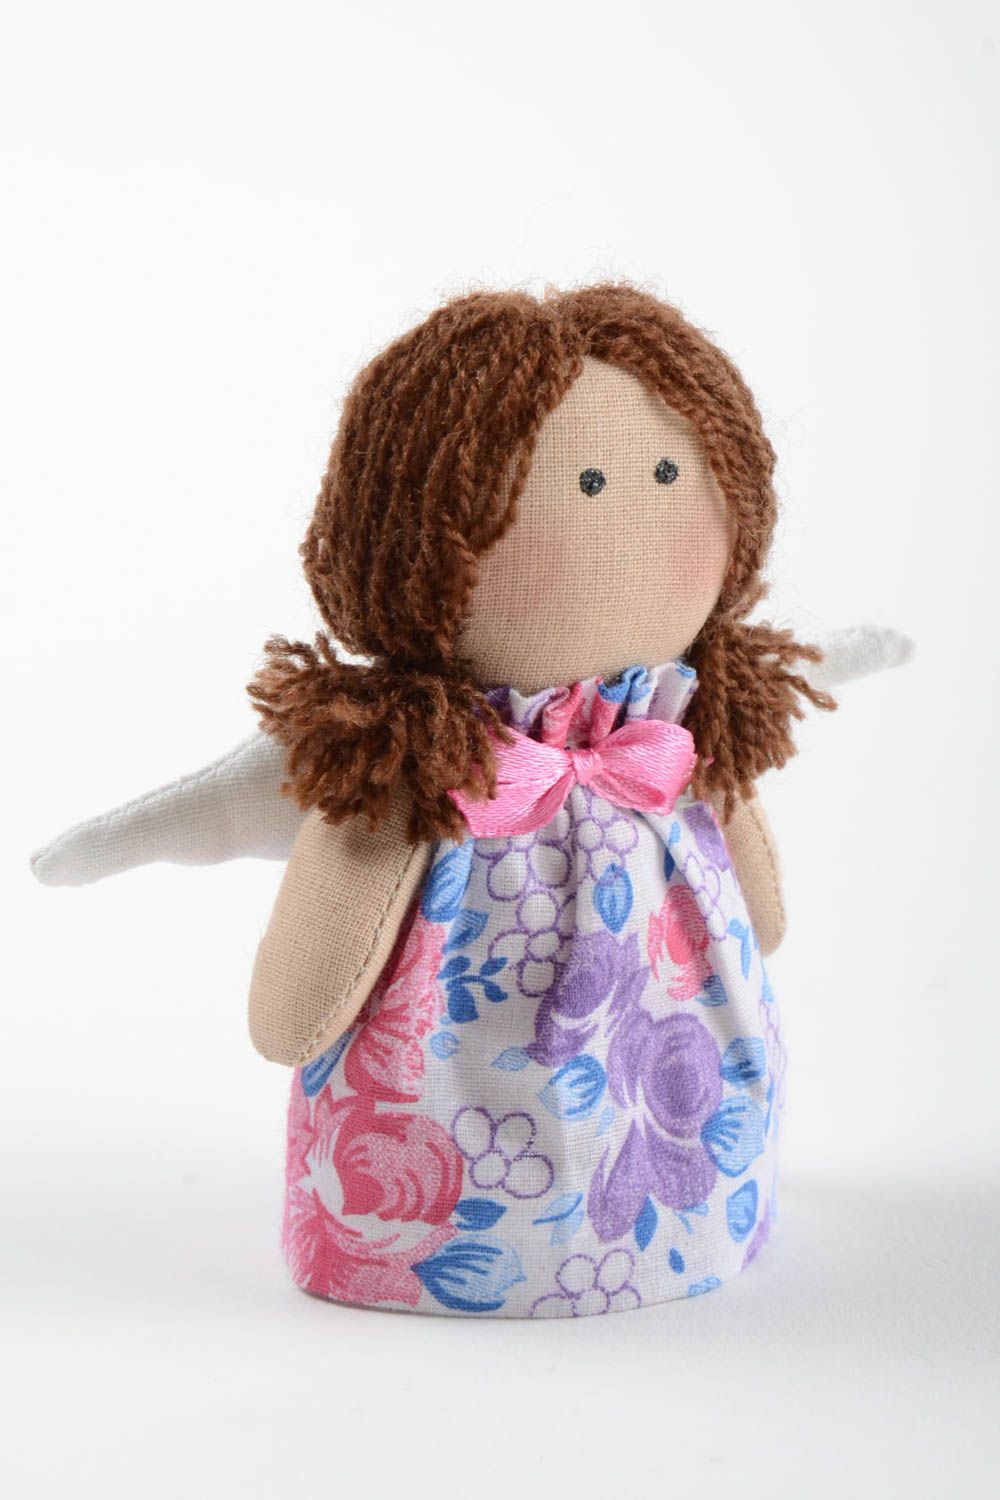 Small homemade fabric interior doll soft rag doll decorative toys gift ideas photo 3